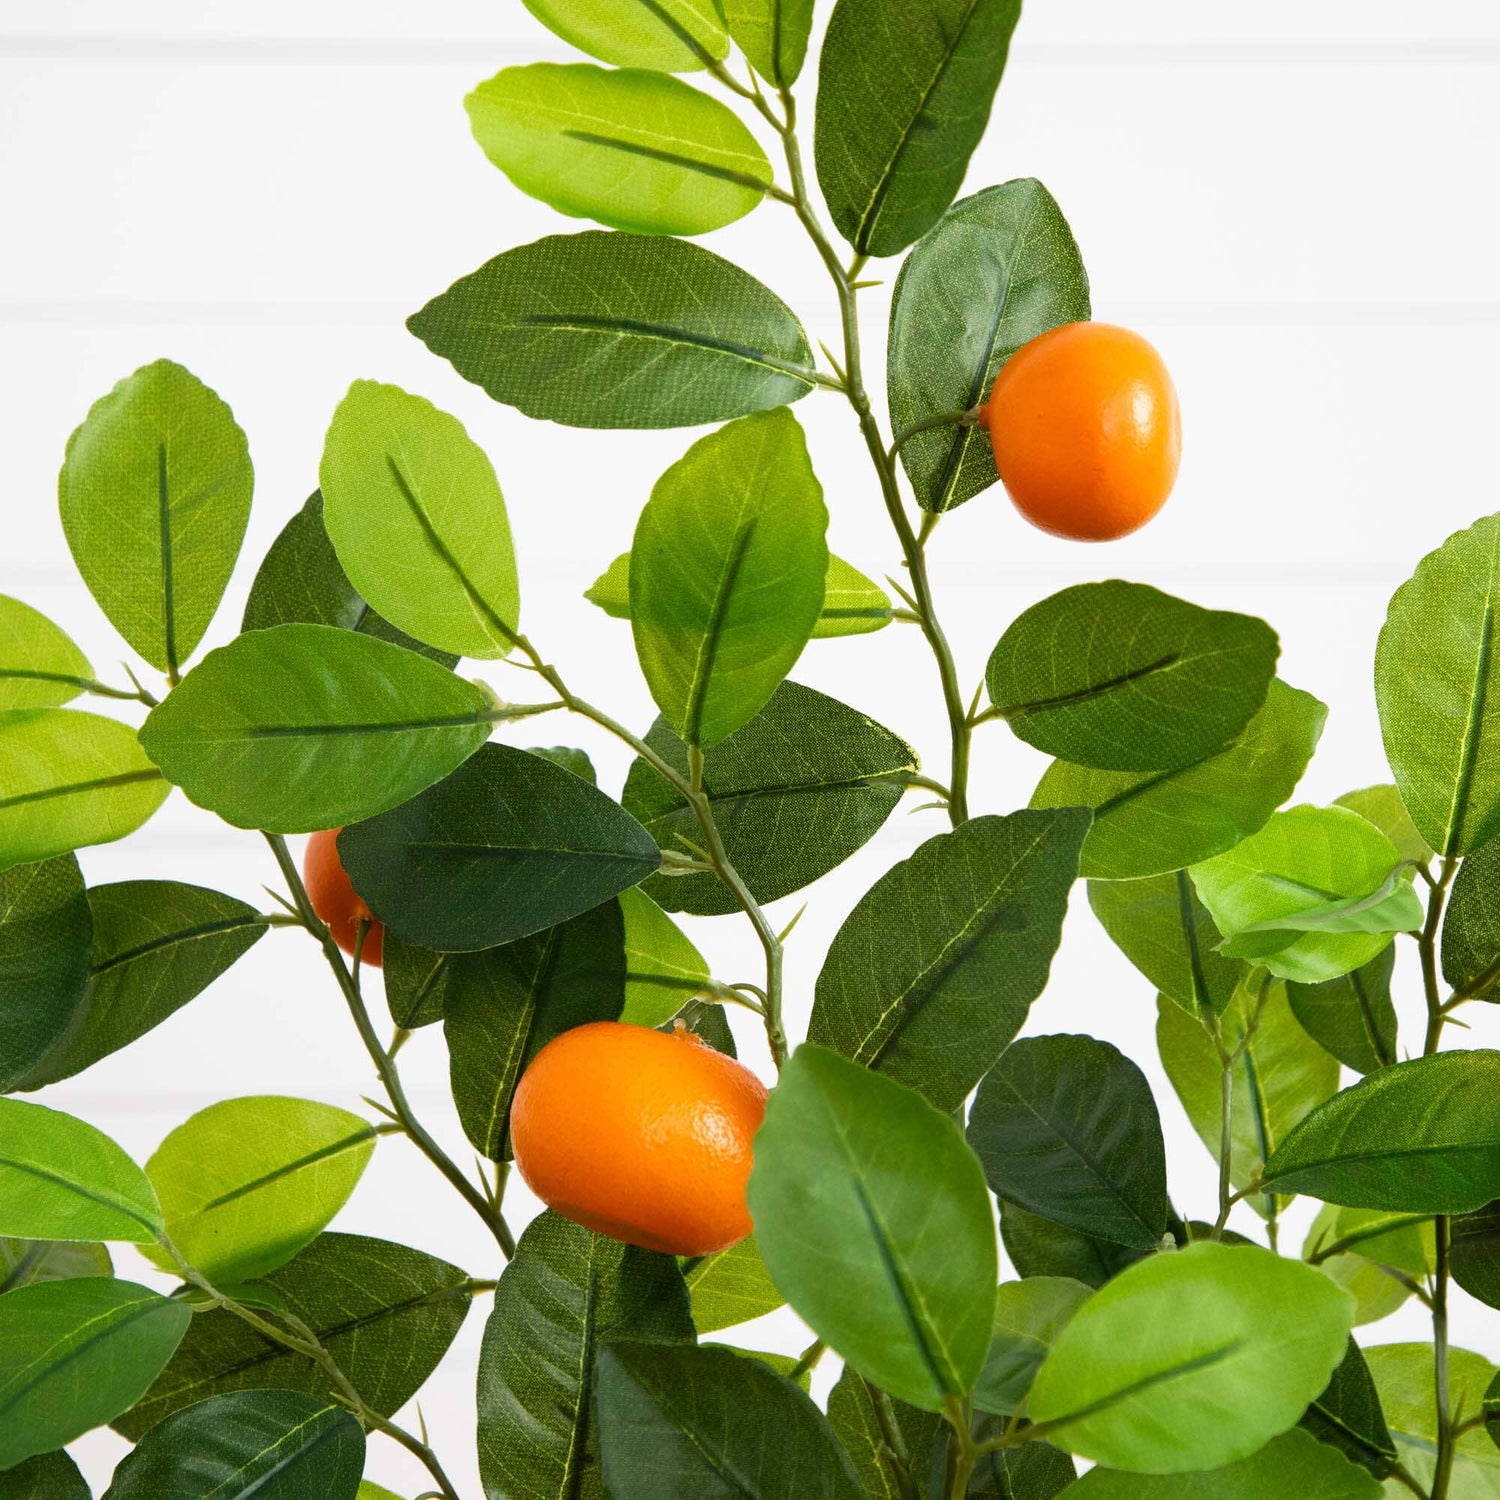 3’ Artificial Tangerine Tree